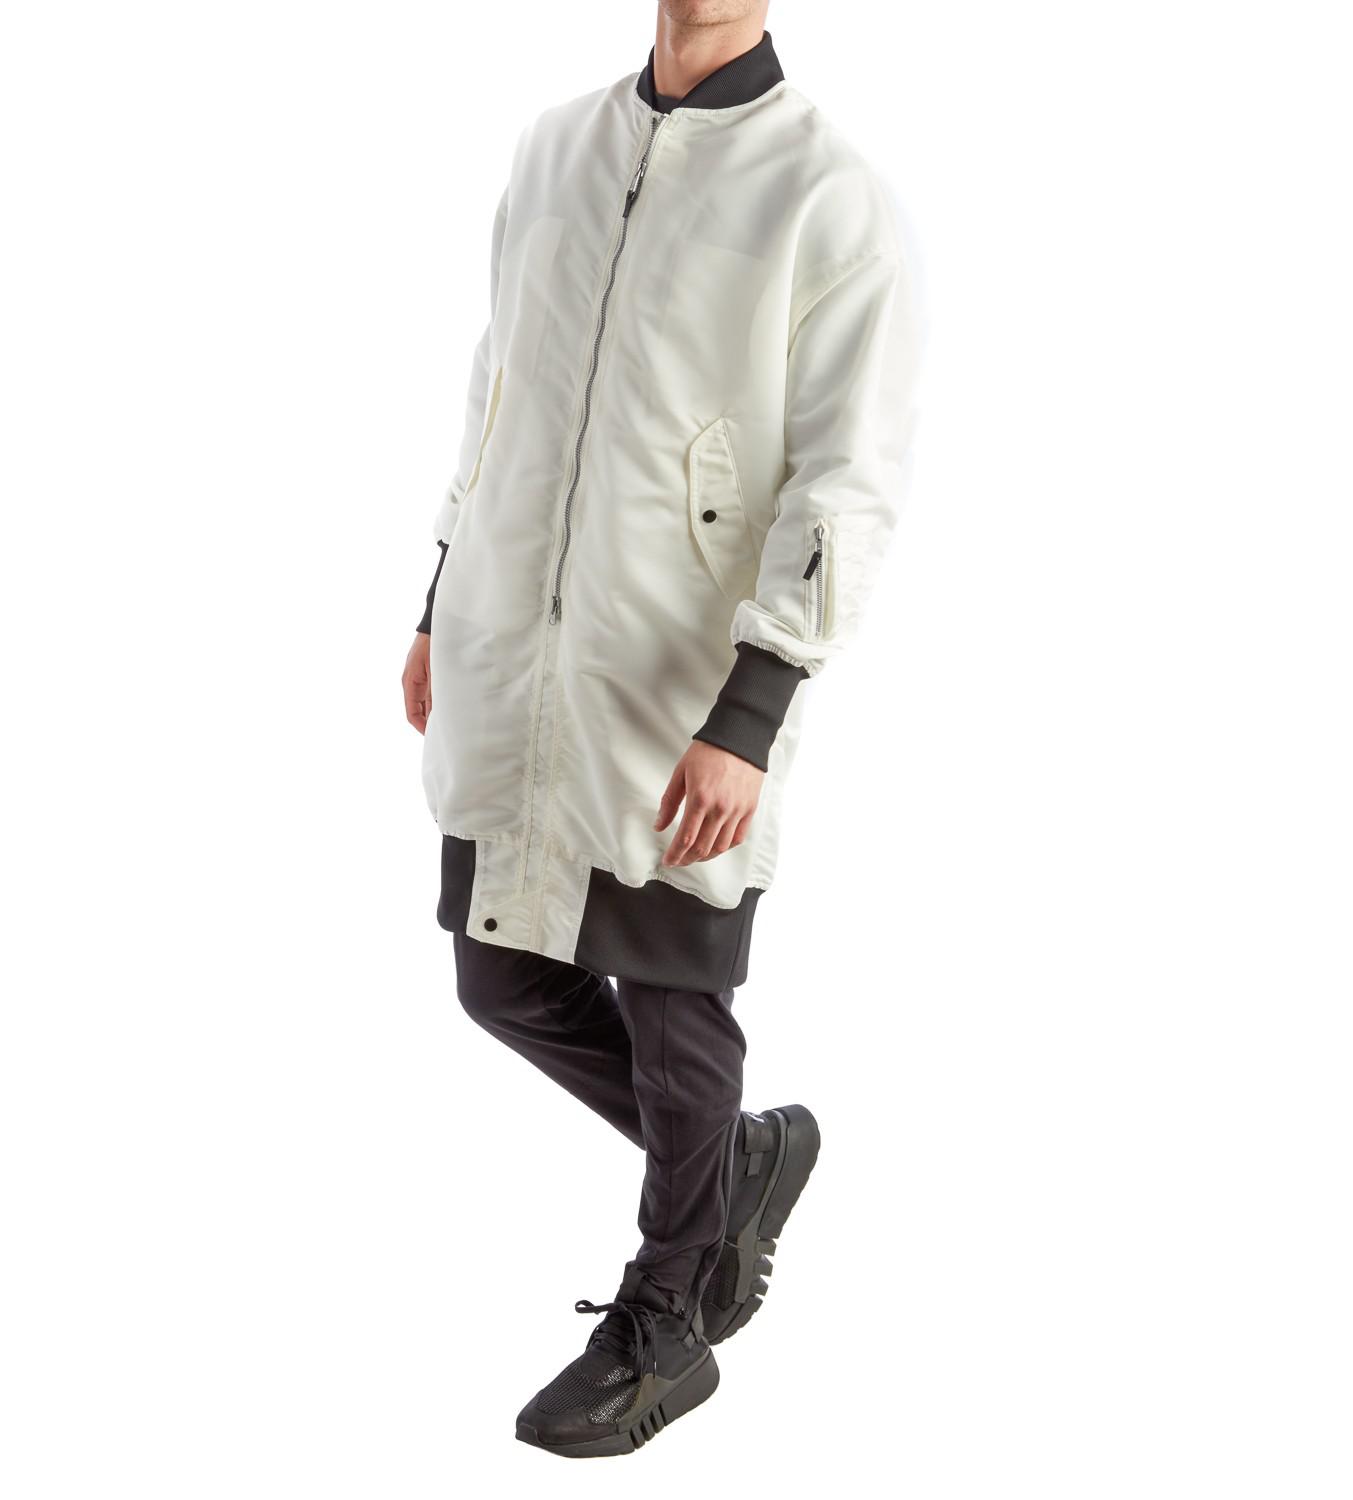 y3 white jacket